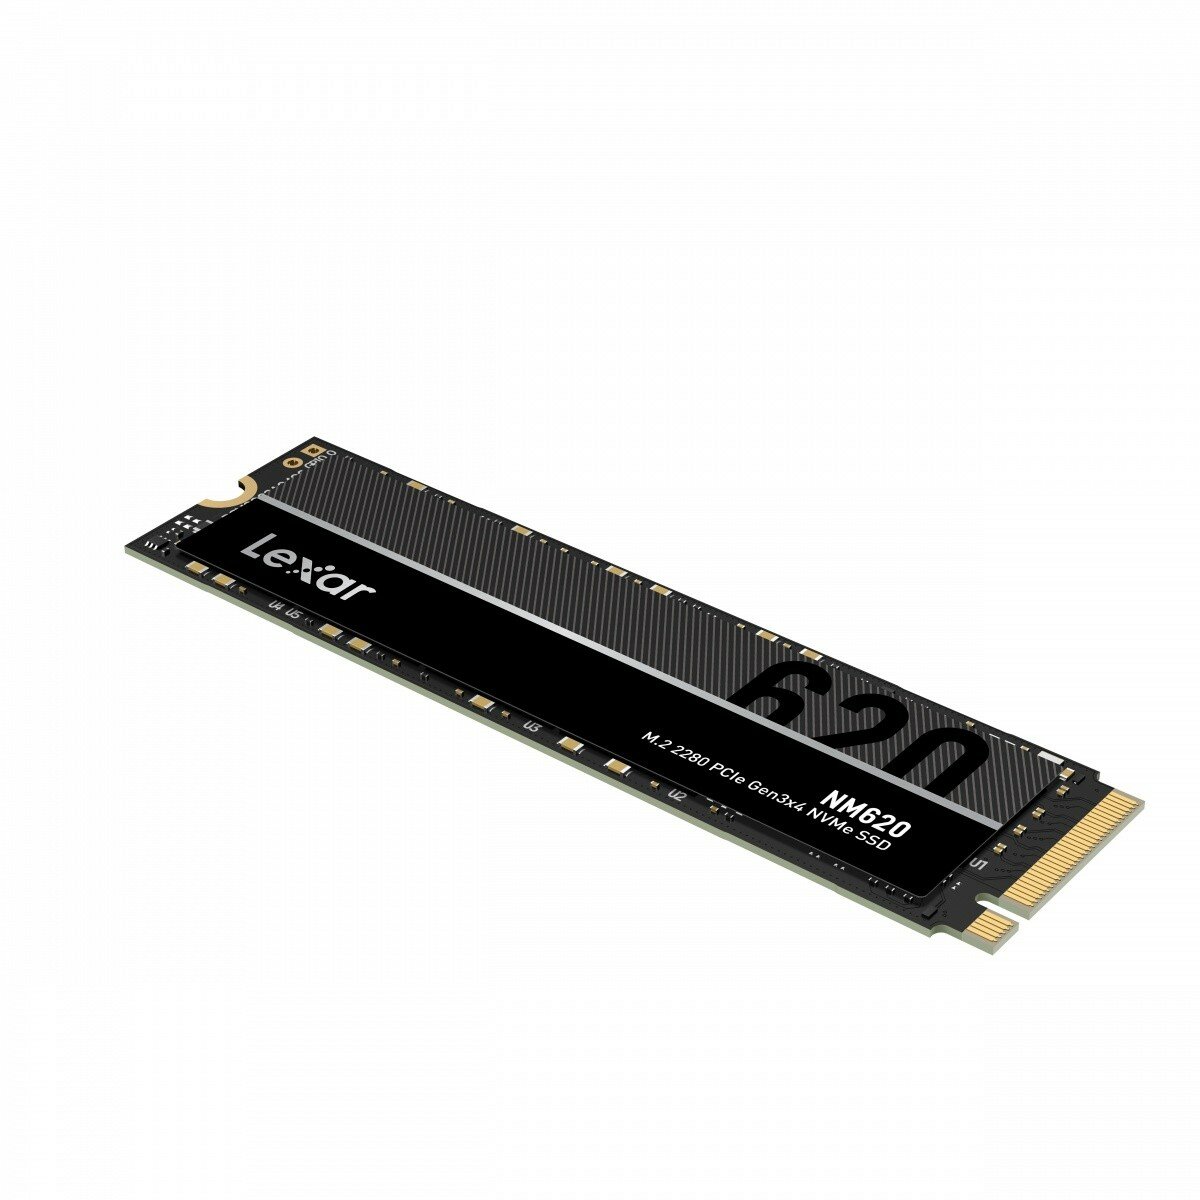 Dysk SSD Lexar NM620 256GB M.2 PCIe NVMe widok dysku pod skosem